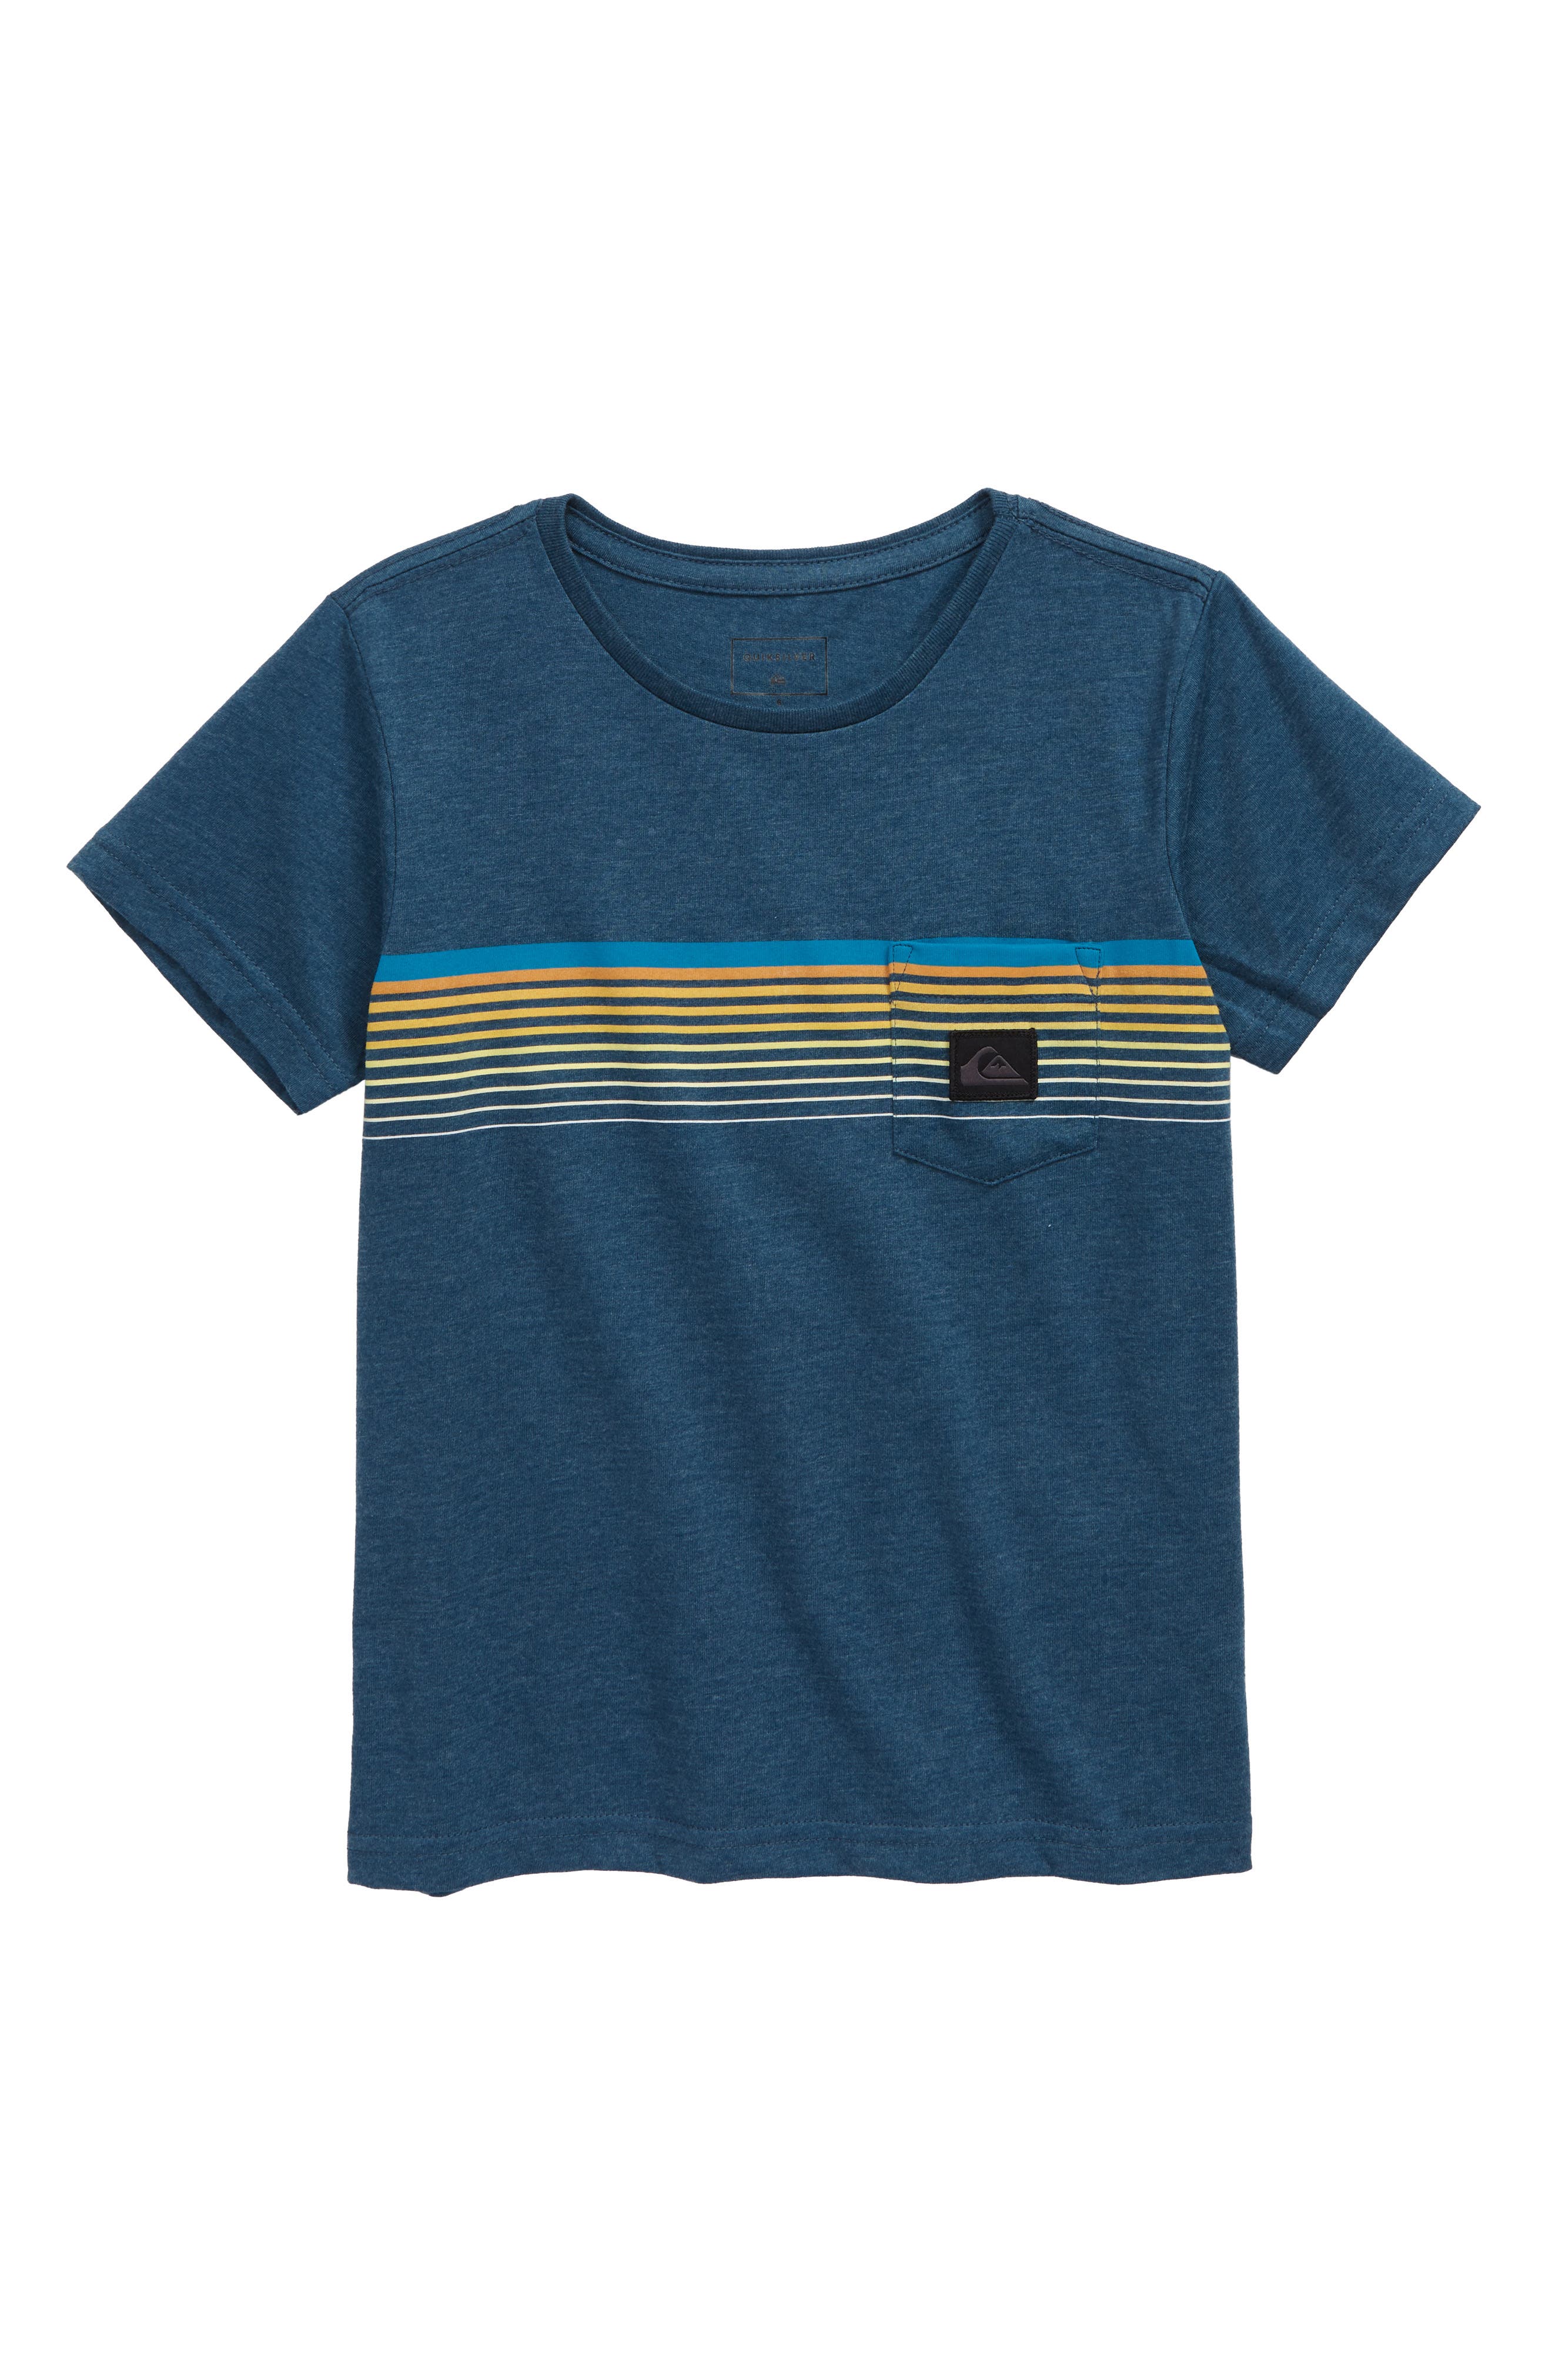 QUIKSILVER Shirt Tshirt Oberteil SLAB POCKET T-Shirt 2020 majolica blue heather 